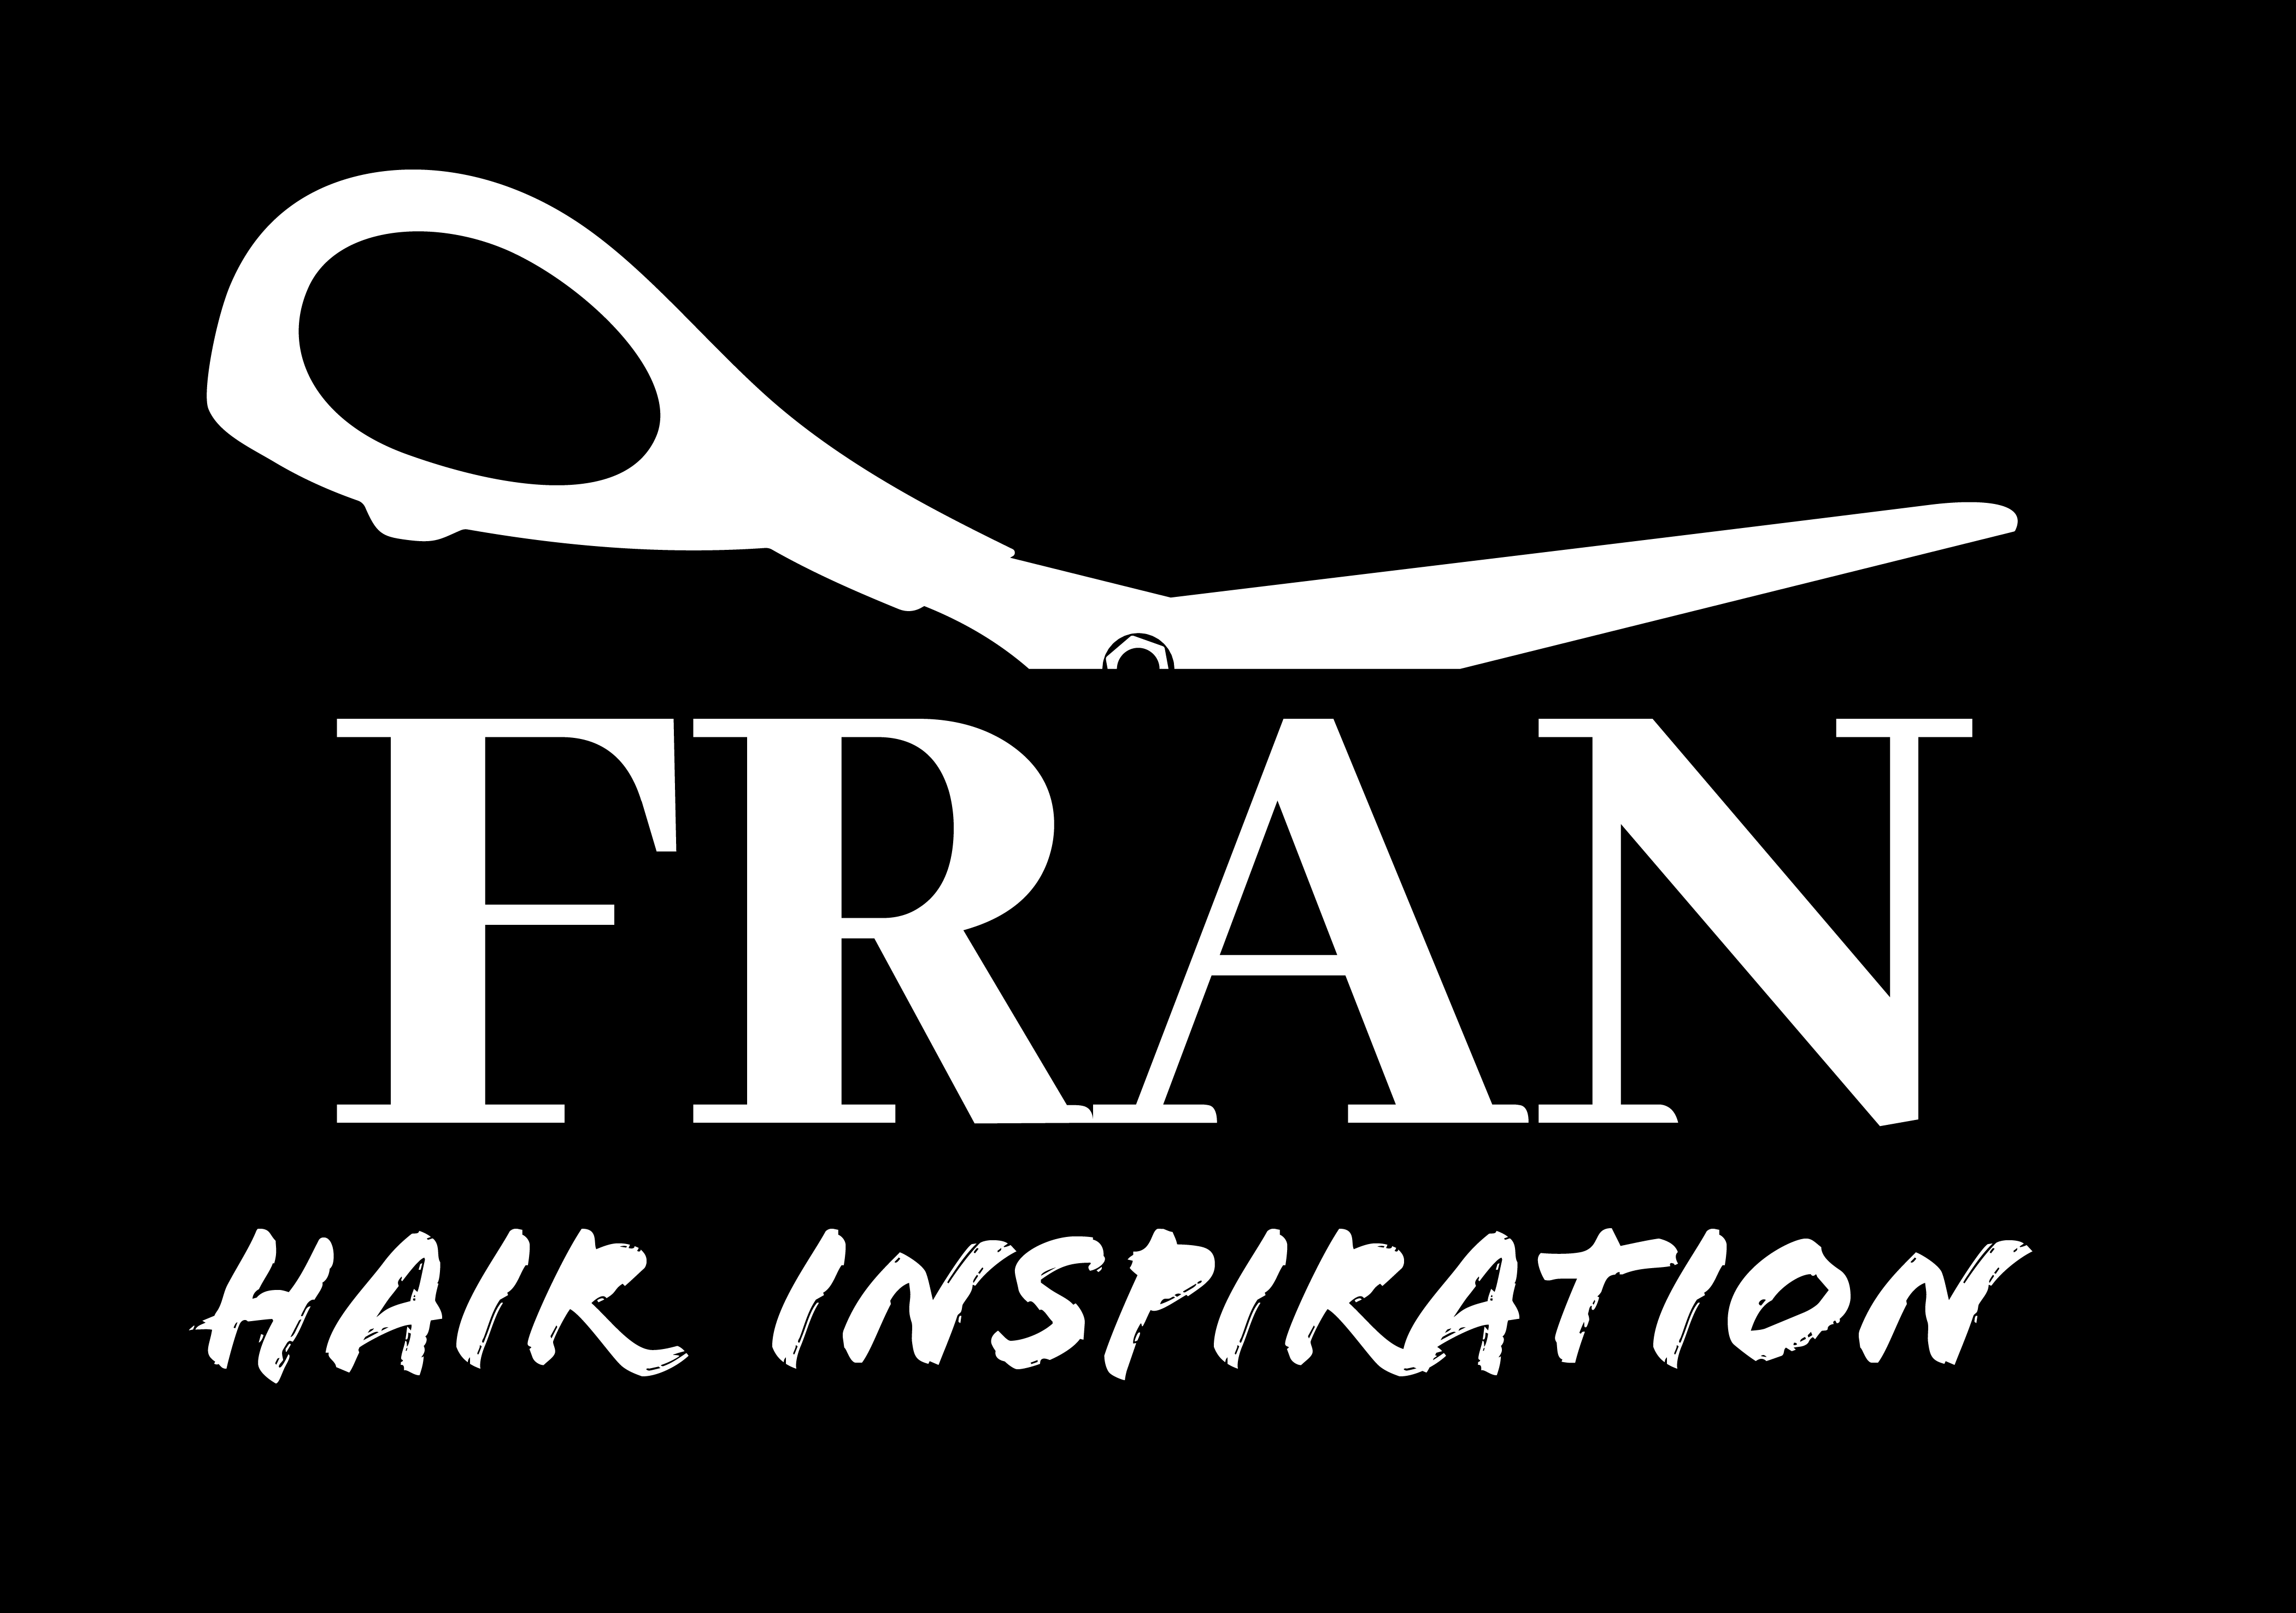 Fran hair inspiration